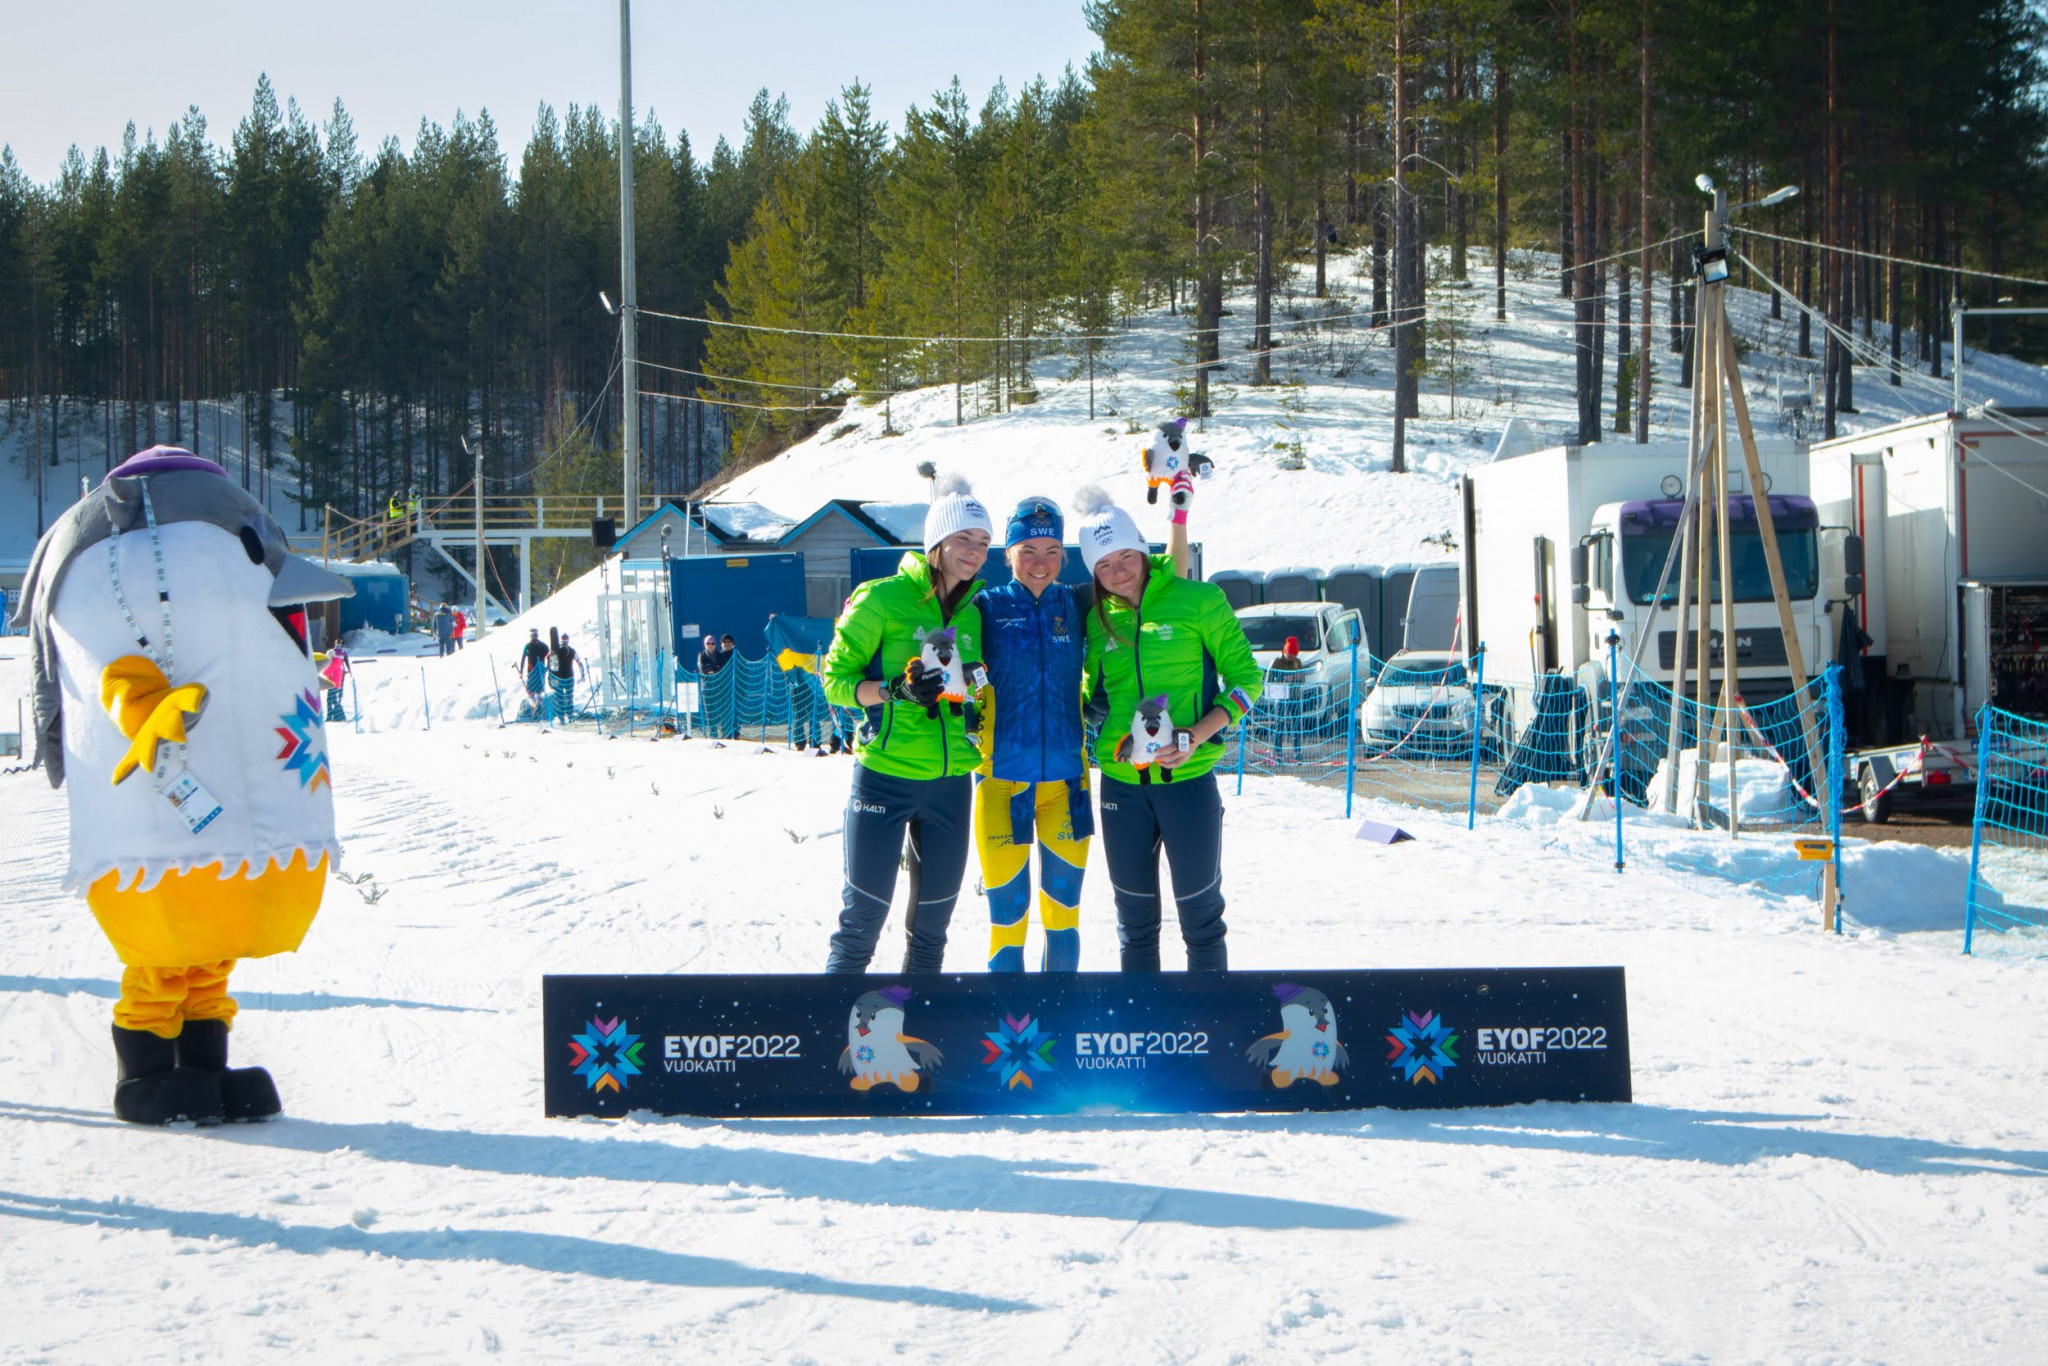 Sweden's Sara Andersson, centre, won the women's sprint by more than 35 seconds ©EYOF 2022 Vuokatti/Konsta Koivisto